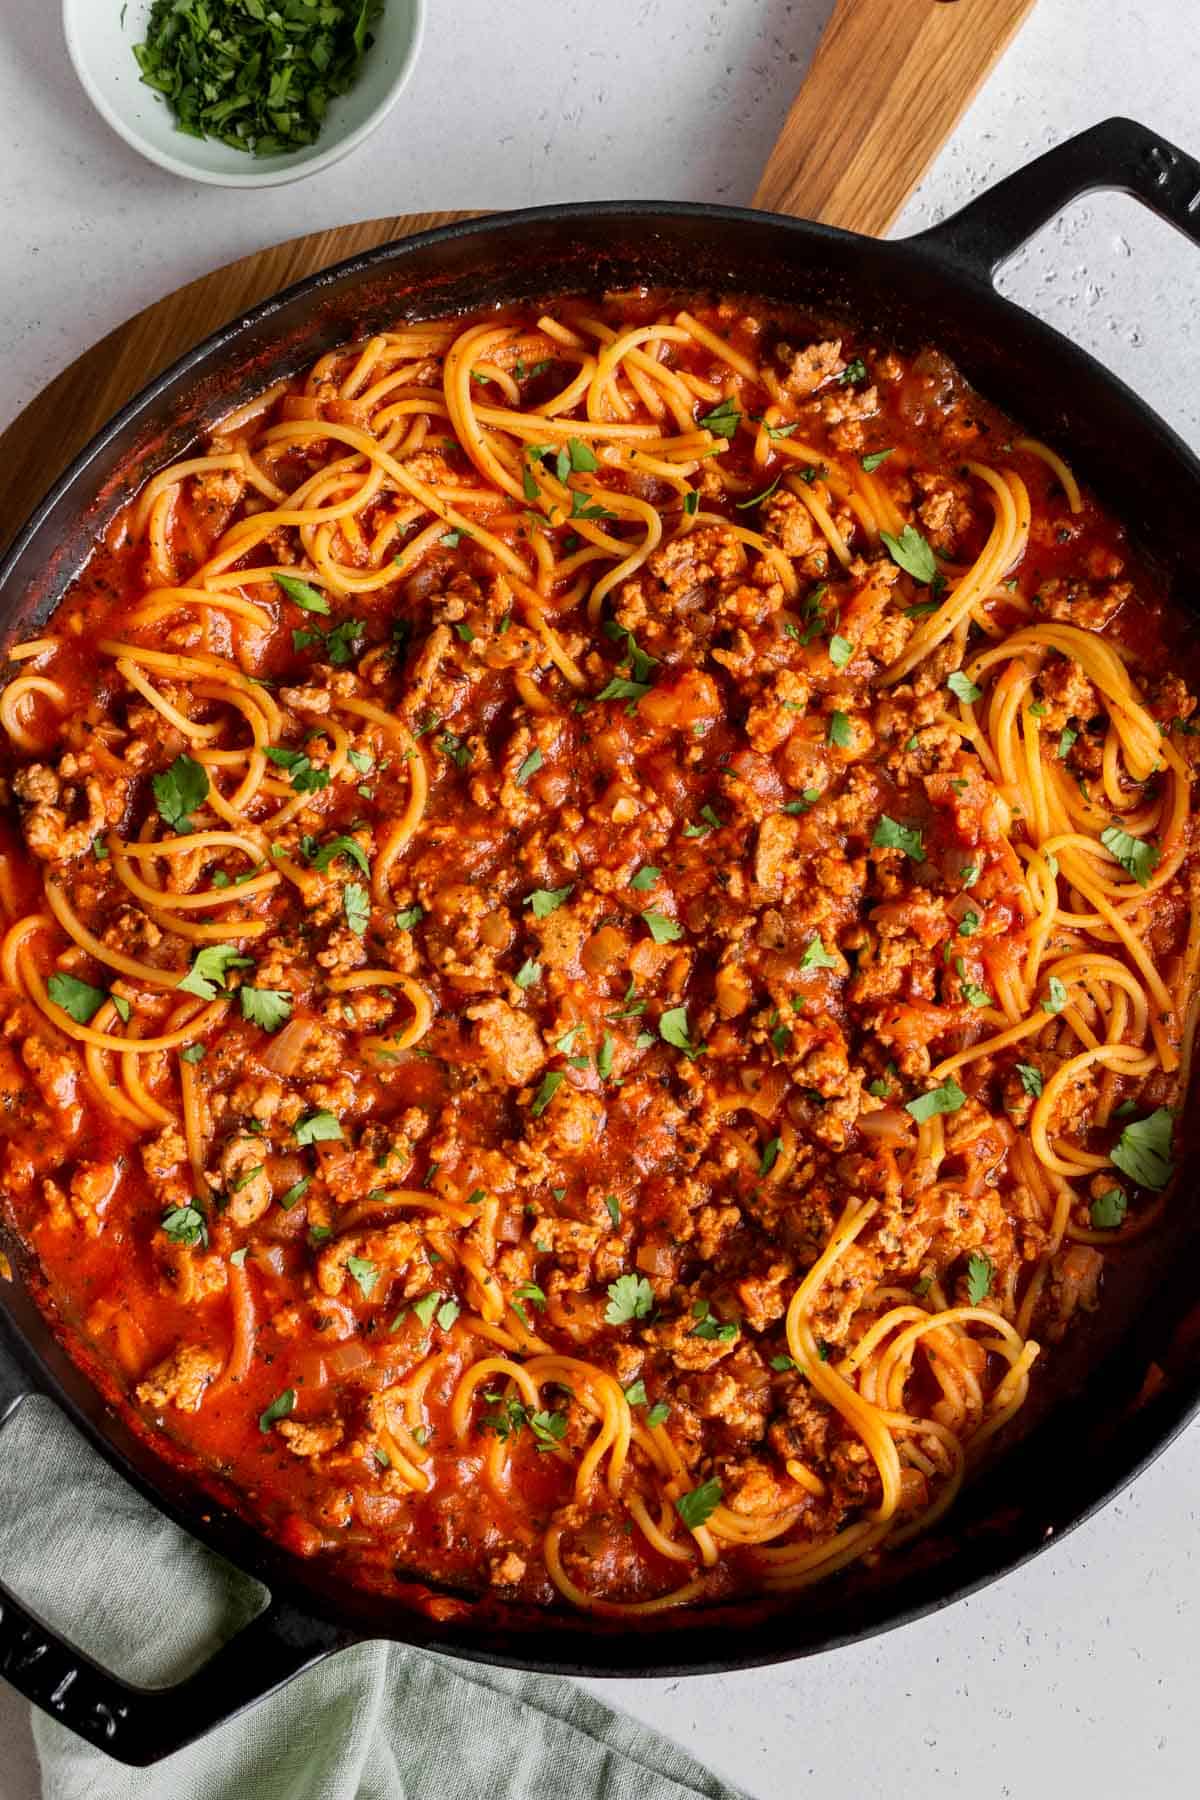 A large skillet of turkey spaghetti.